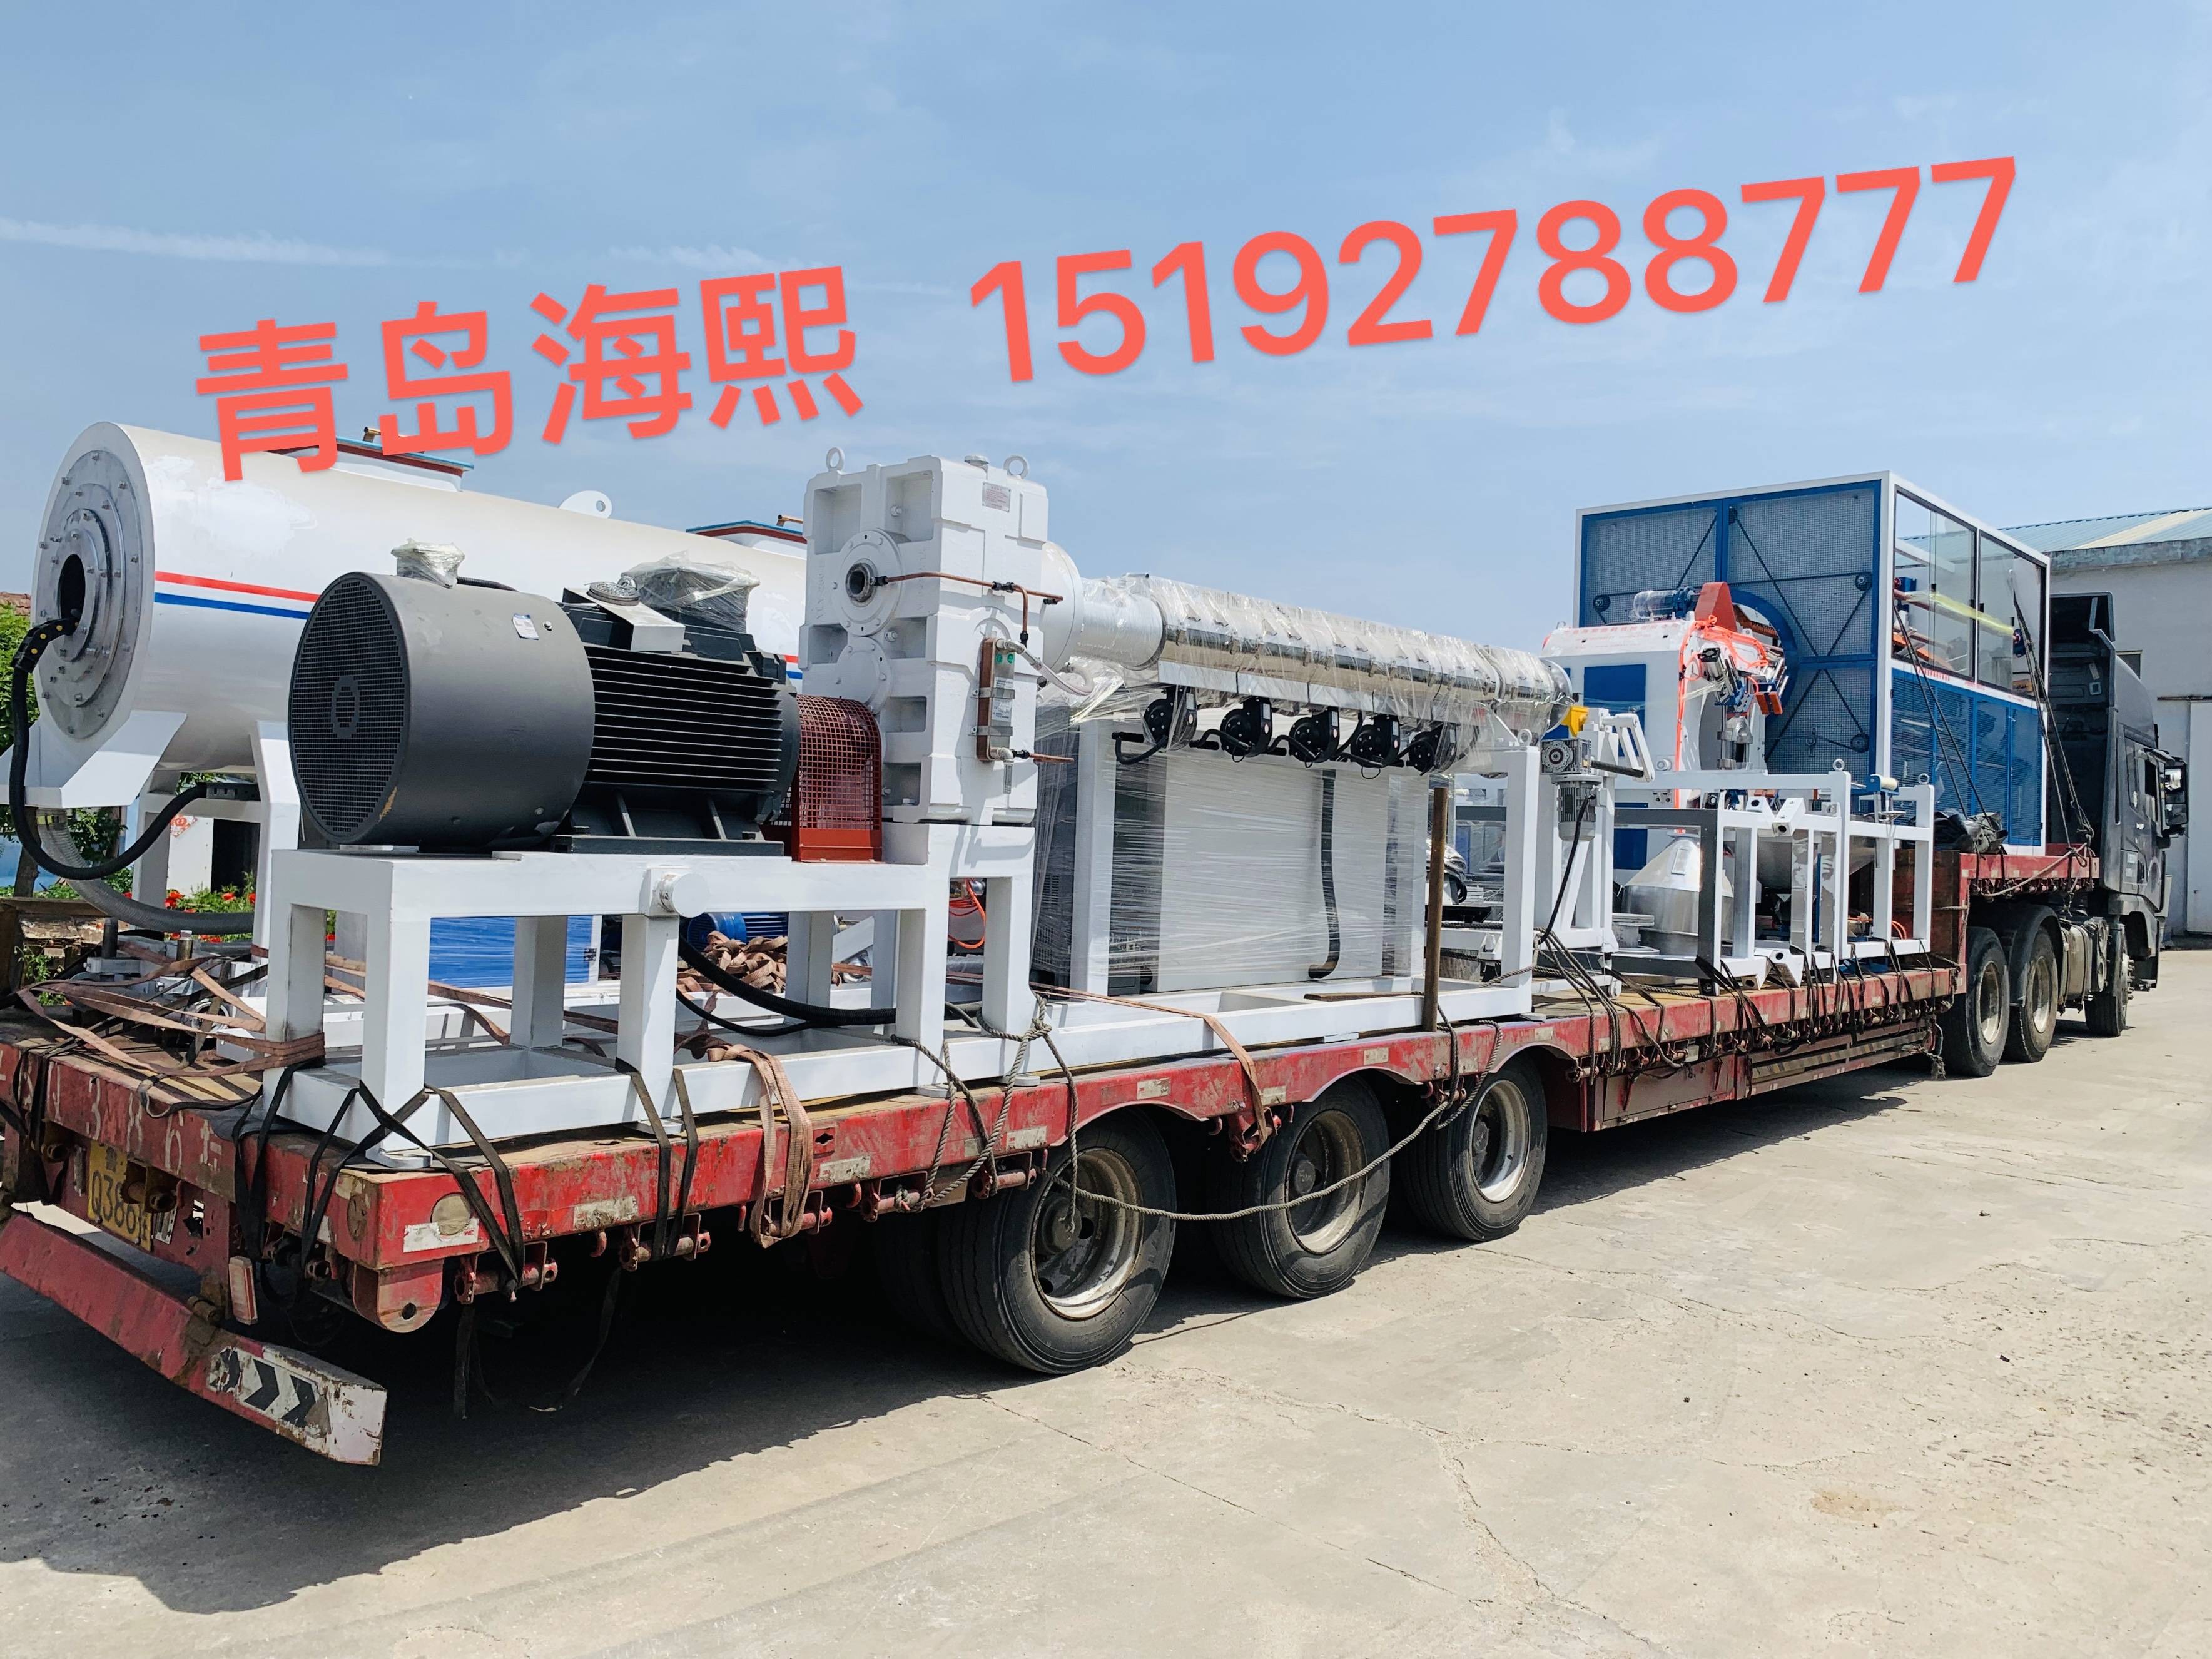 Gansu Jinsheng Hongda Insulation and Corrosion Protection Engineering Co., LTD